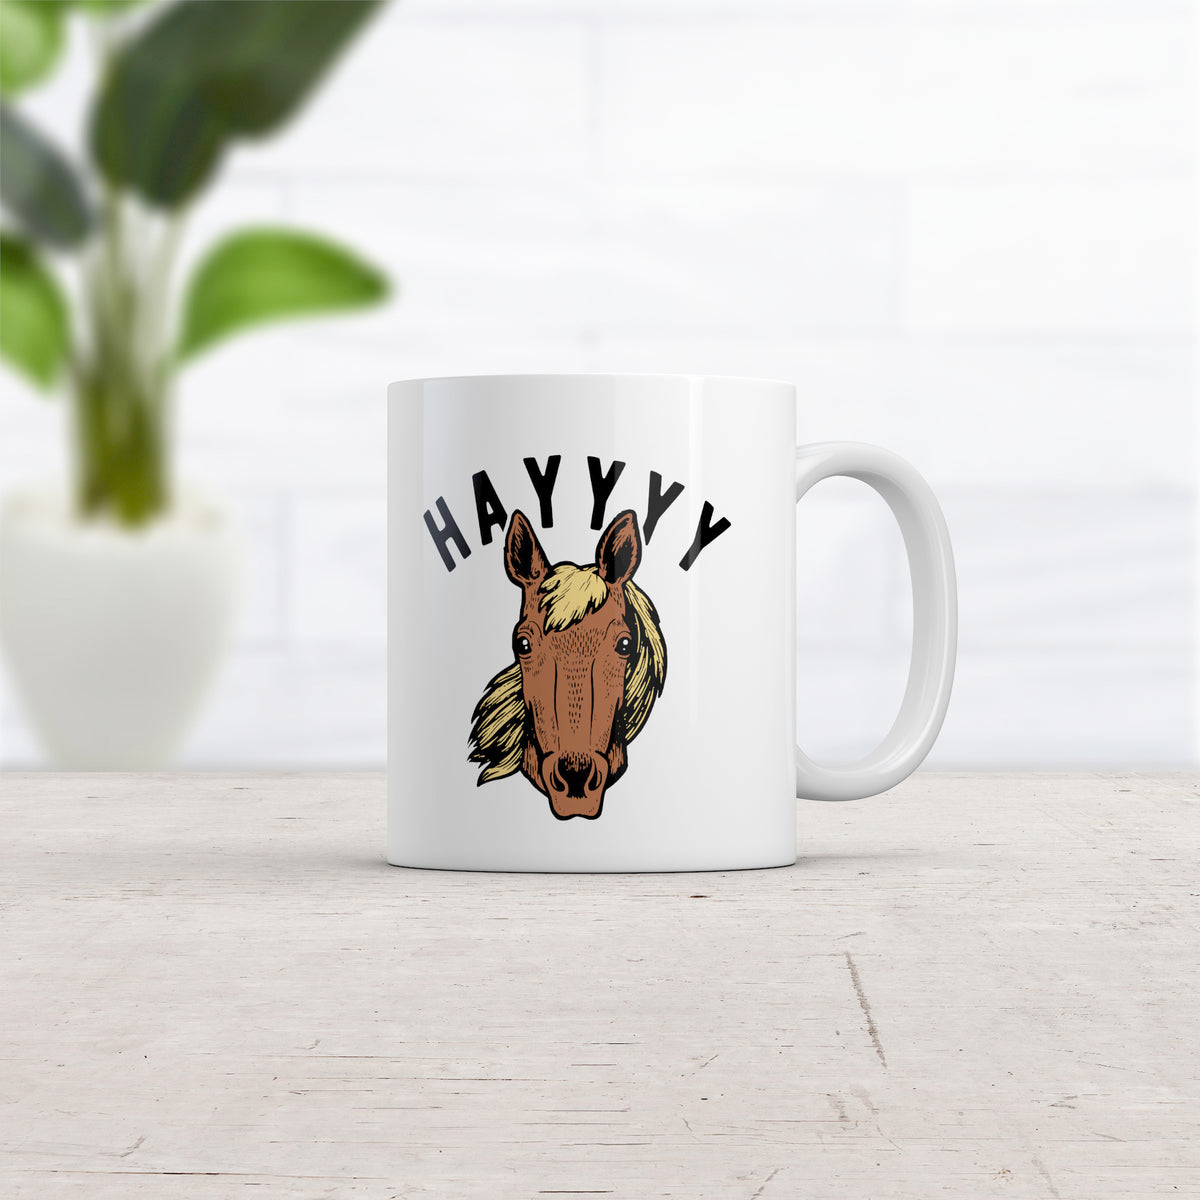 Hayyyy Horse Mug